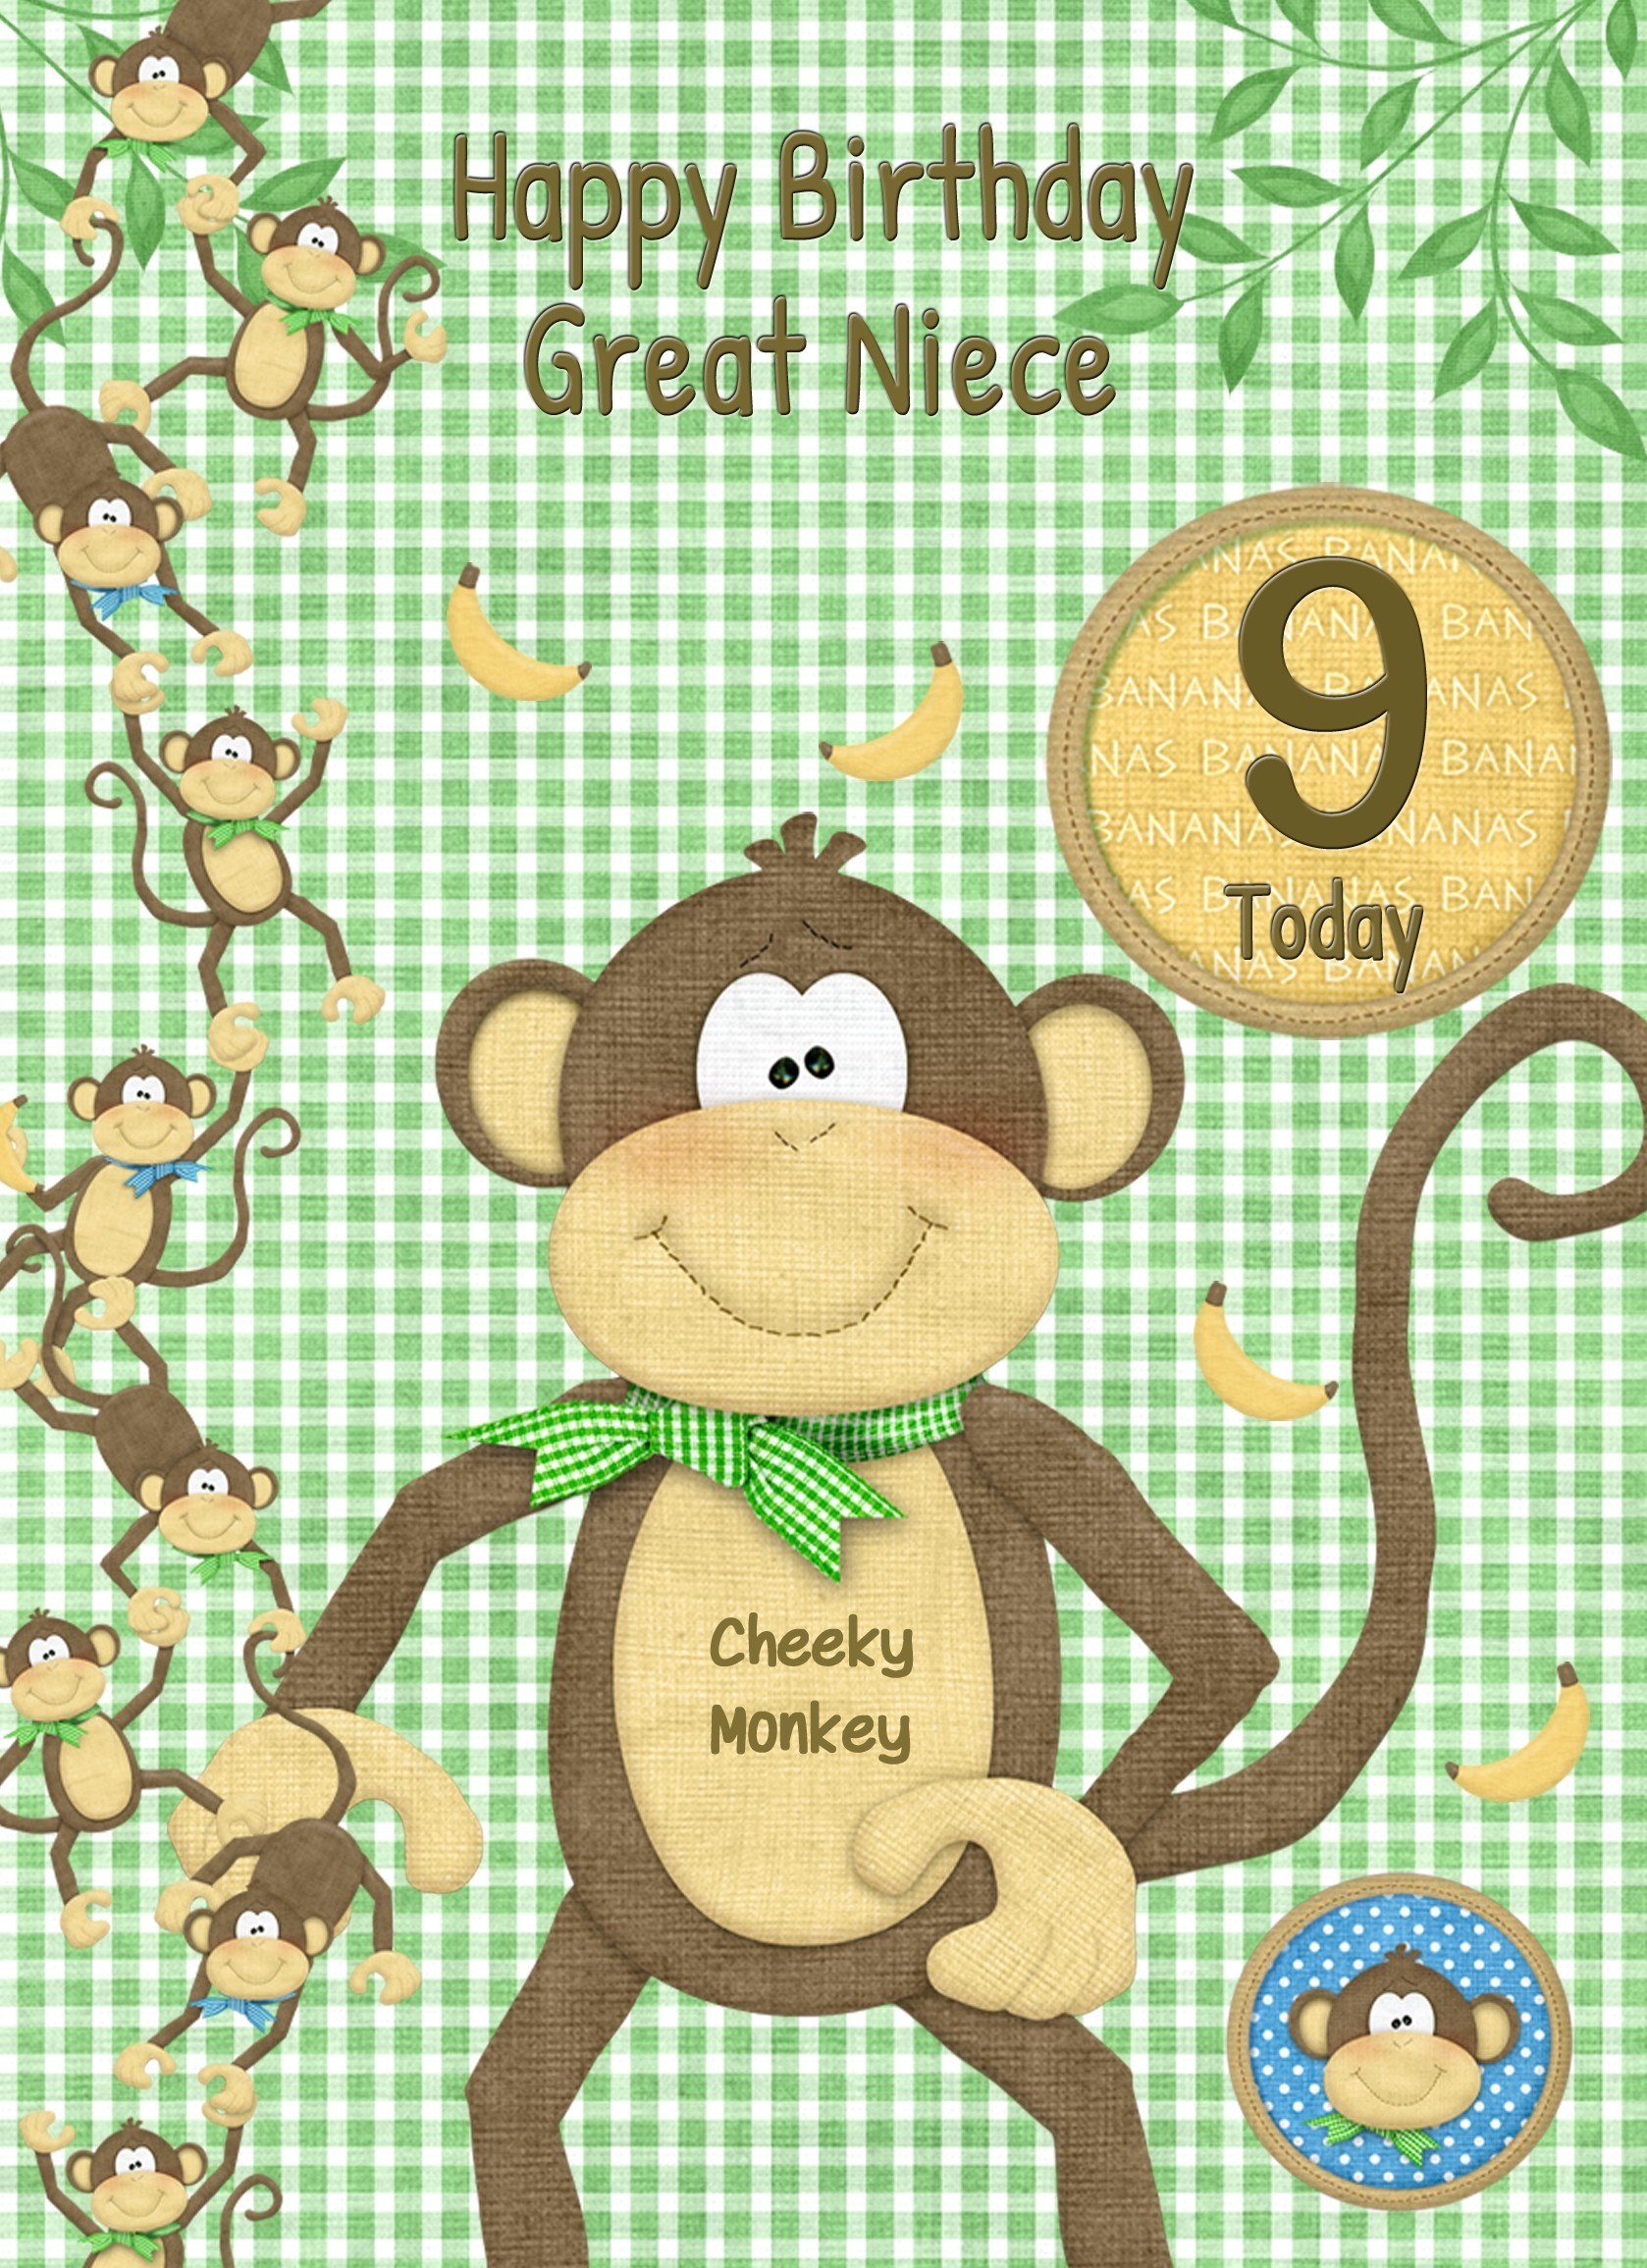 Kids 9th Birthday Cheeky Monkey Cartoon Card for Great Niece